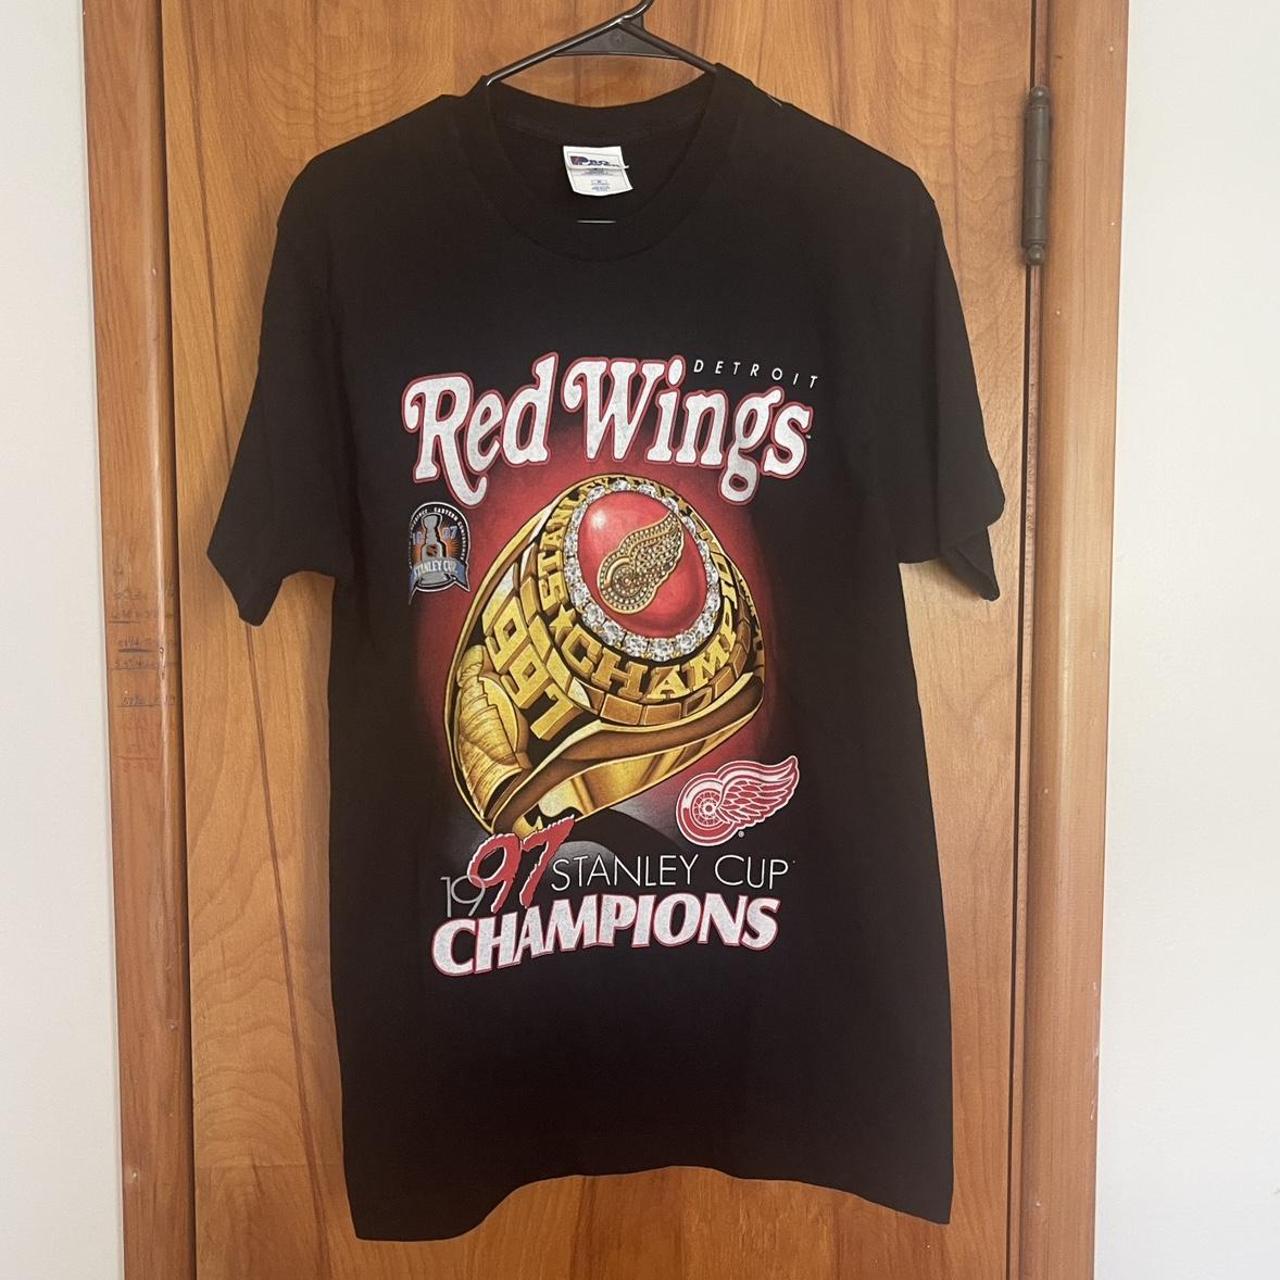 Detroit Red Wings Retro Brand Red Hockey Sticks Vintage Cotton T-Shirt